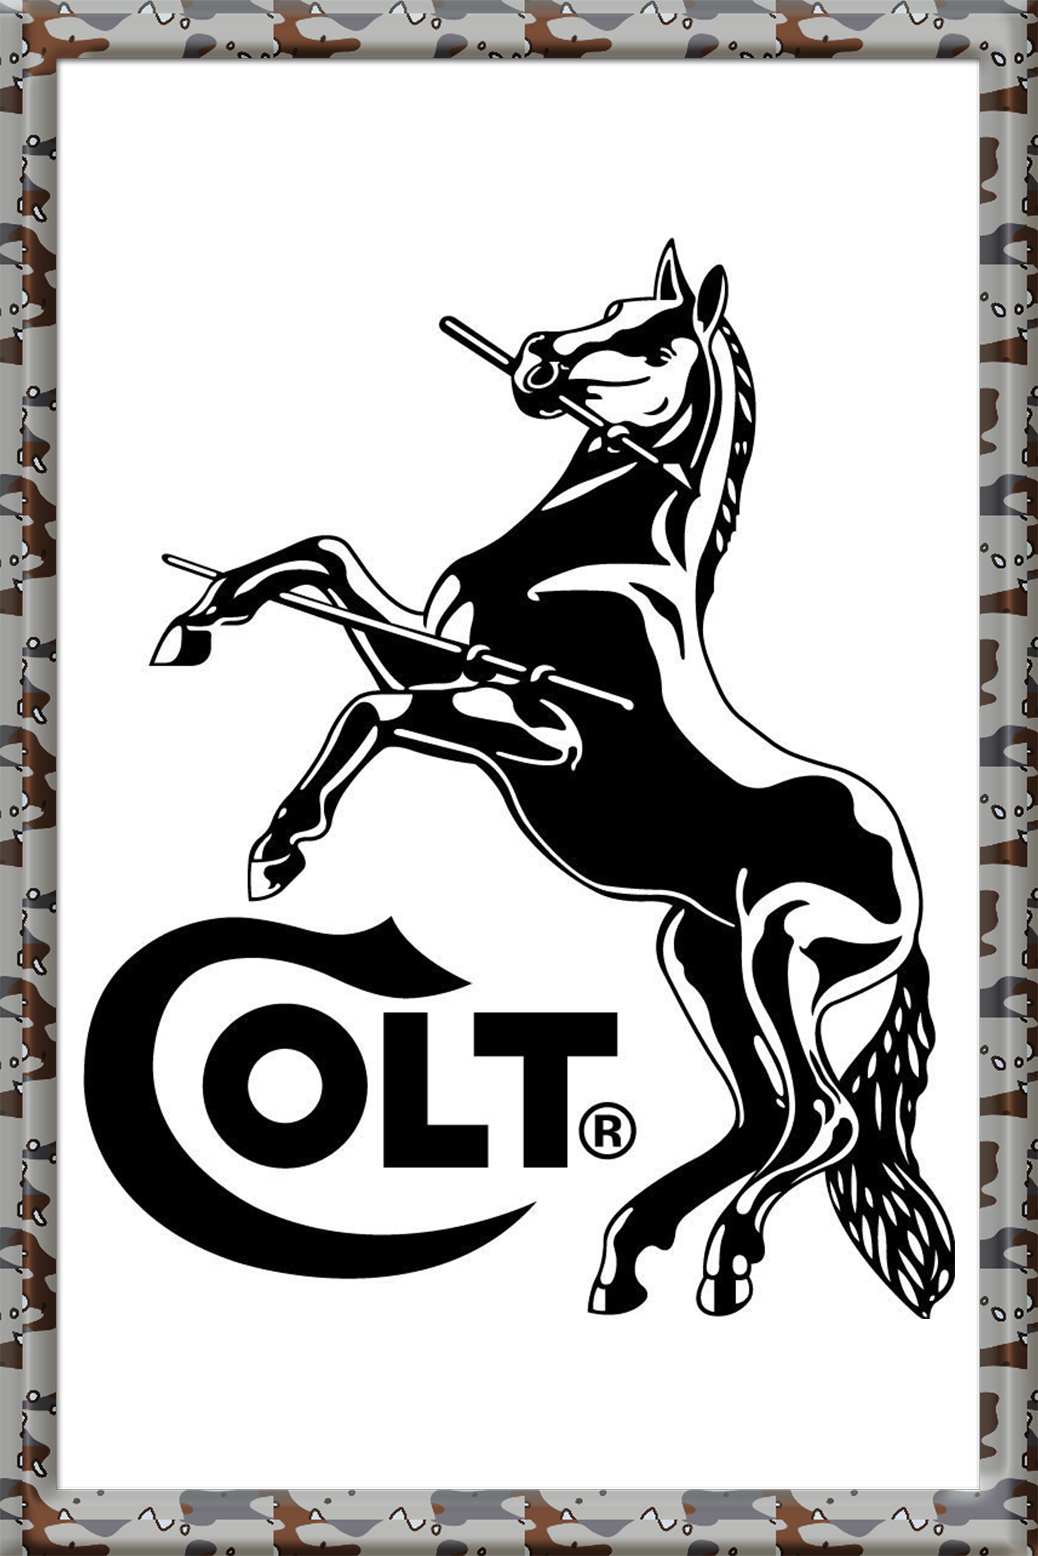 Prova Colt’s Patent Firearms Manufacturing Company